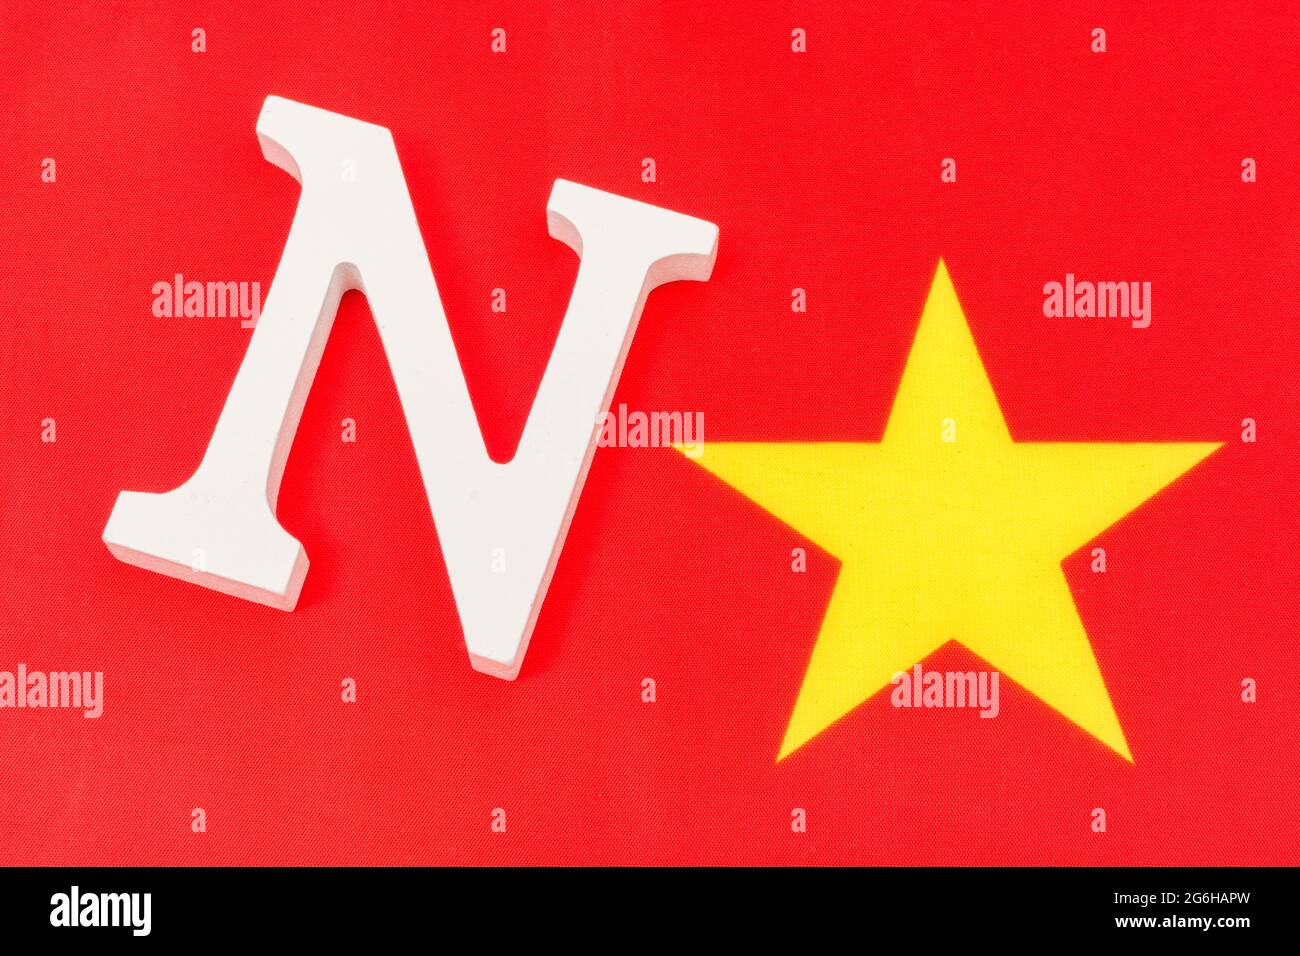 Fabric China flag + wood 'N' & yellow star to represent 'No'. For Australia & India China boycott, China human rights, Philippines' China resistance. Stock Photo